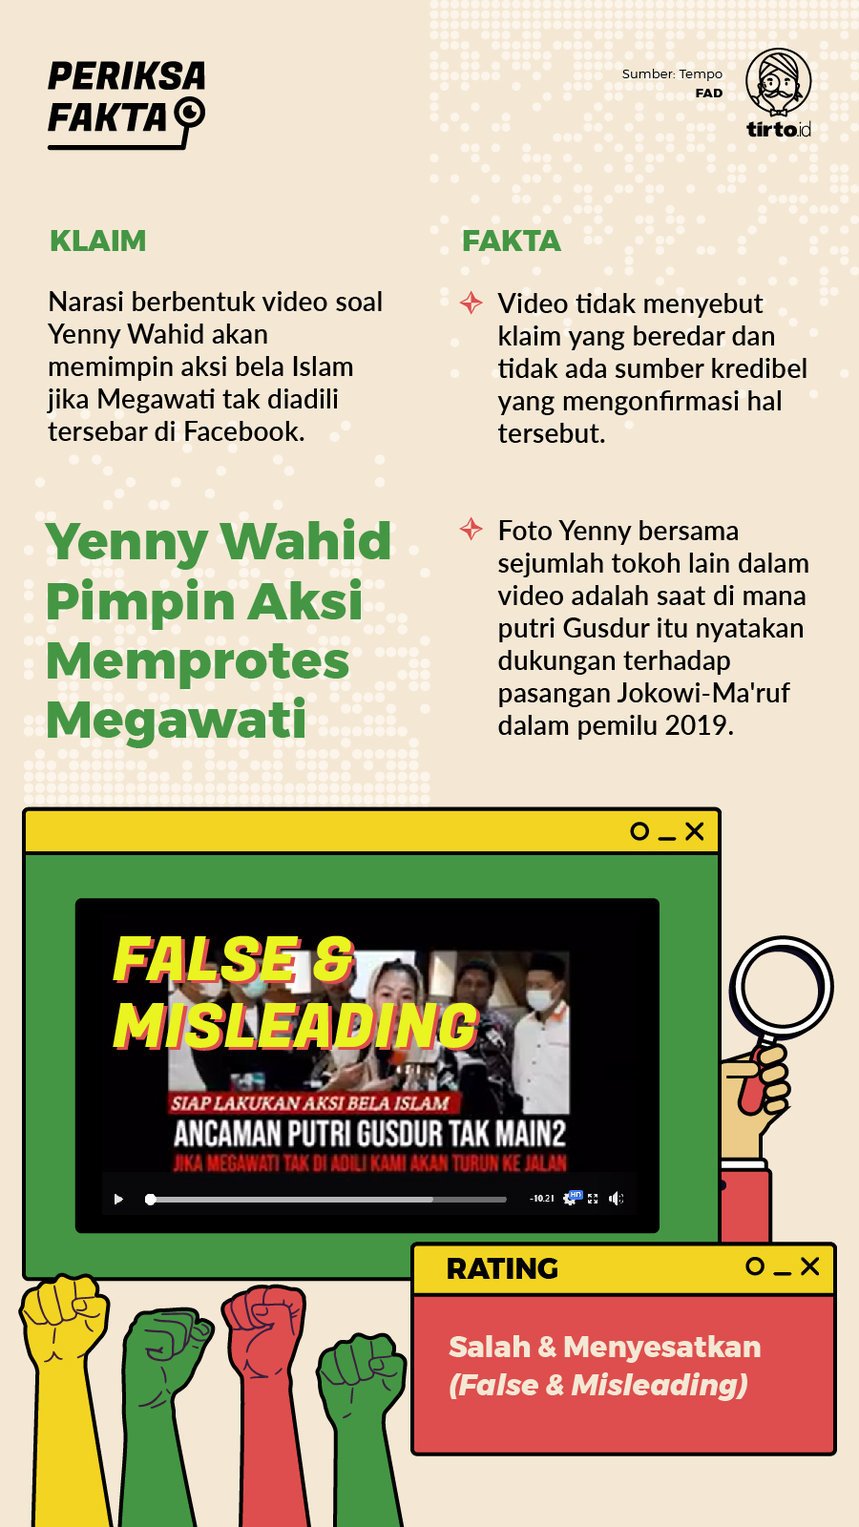 Infografik Periksa Fakta Yenny Wahid